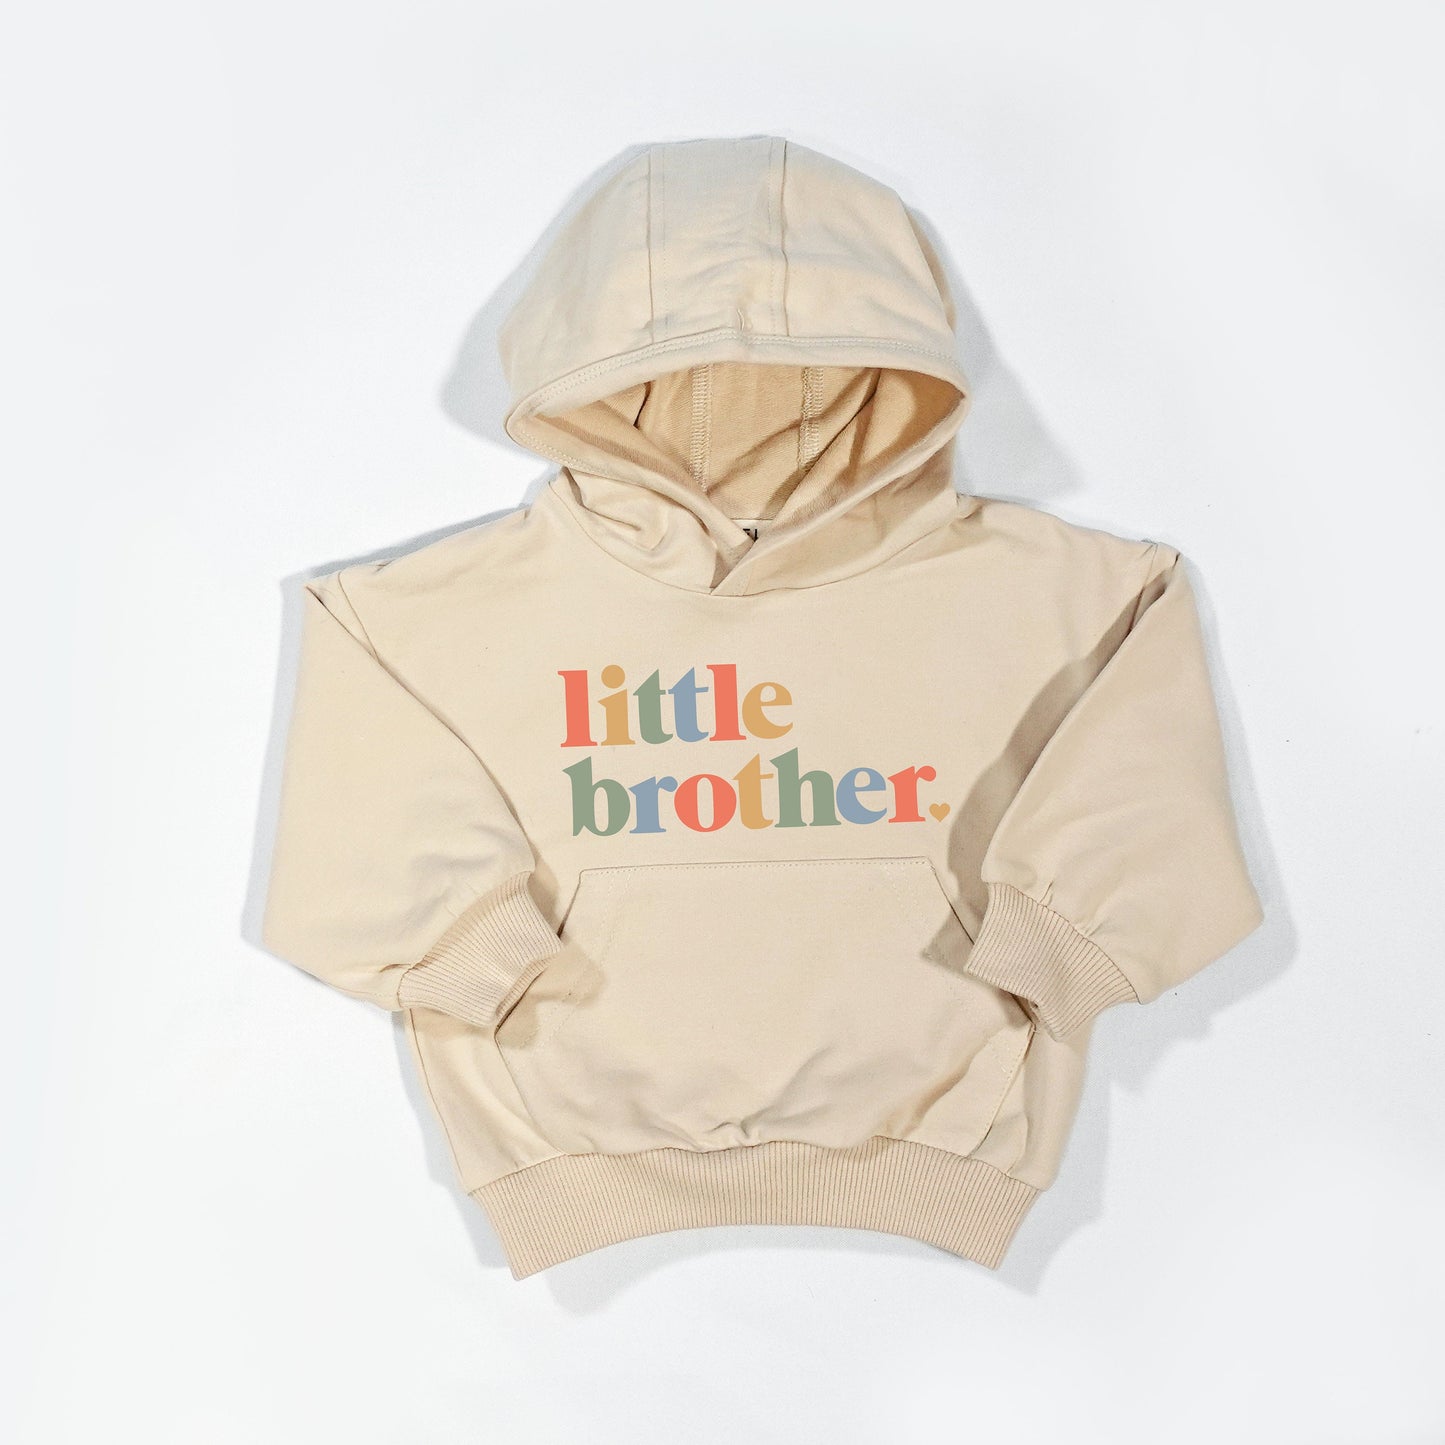 Big Bro Sweatshirt, Big Brother New Baby Announcement, Little Sister Baby Announcement